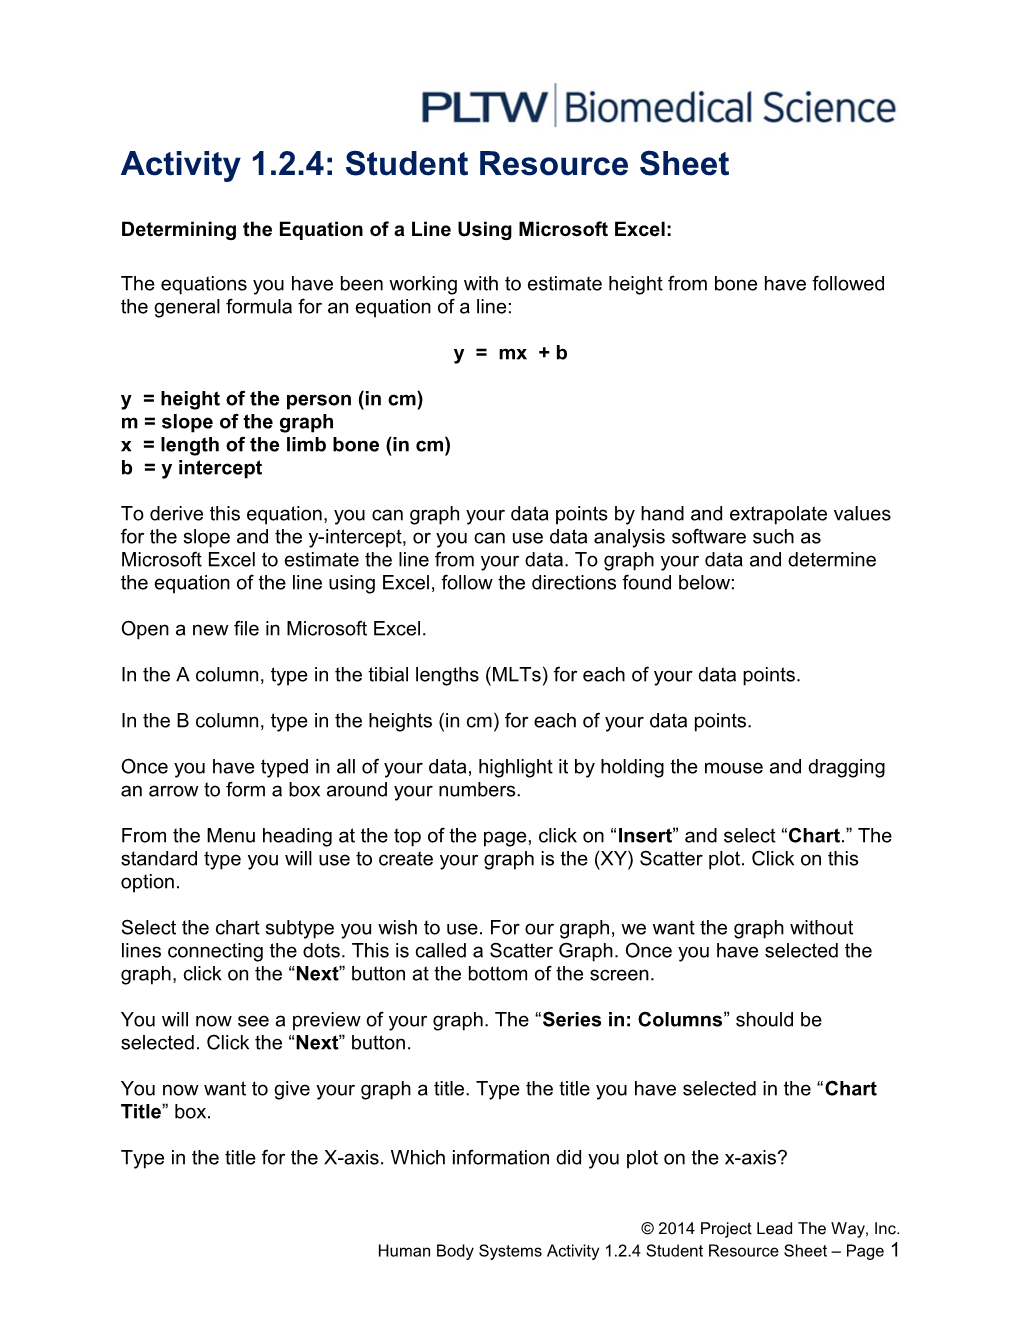 Activity 1.2.4: Student Resource Sheet